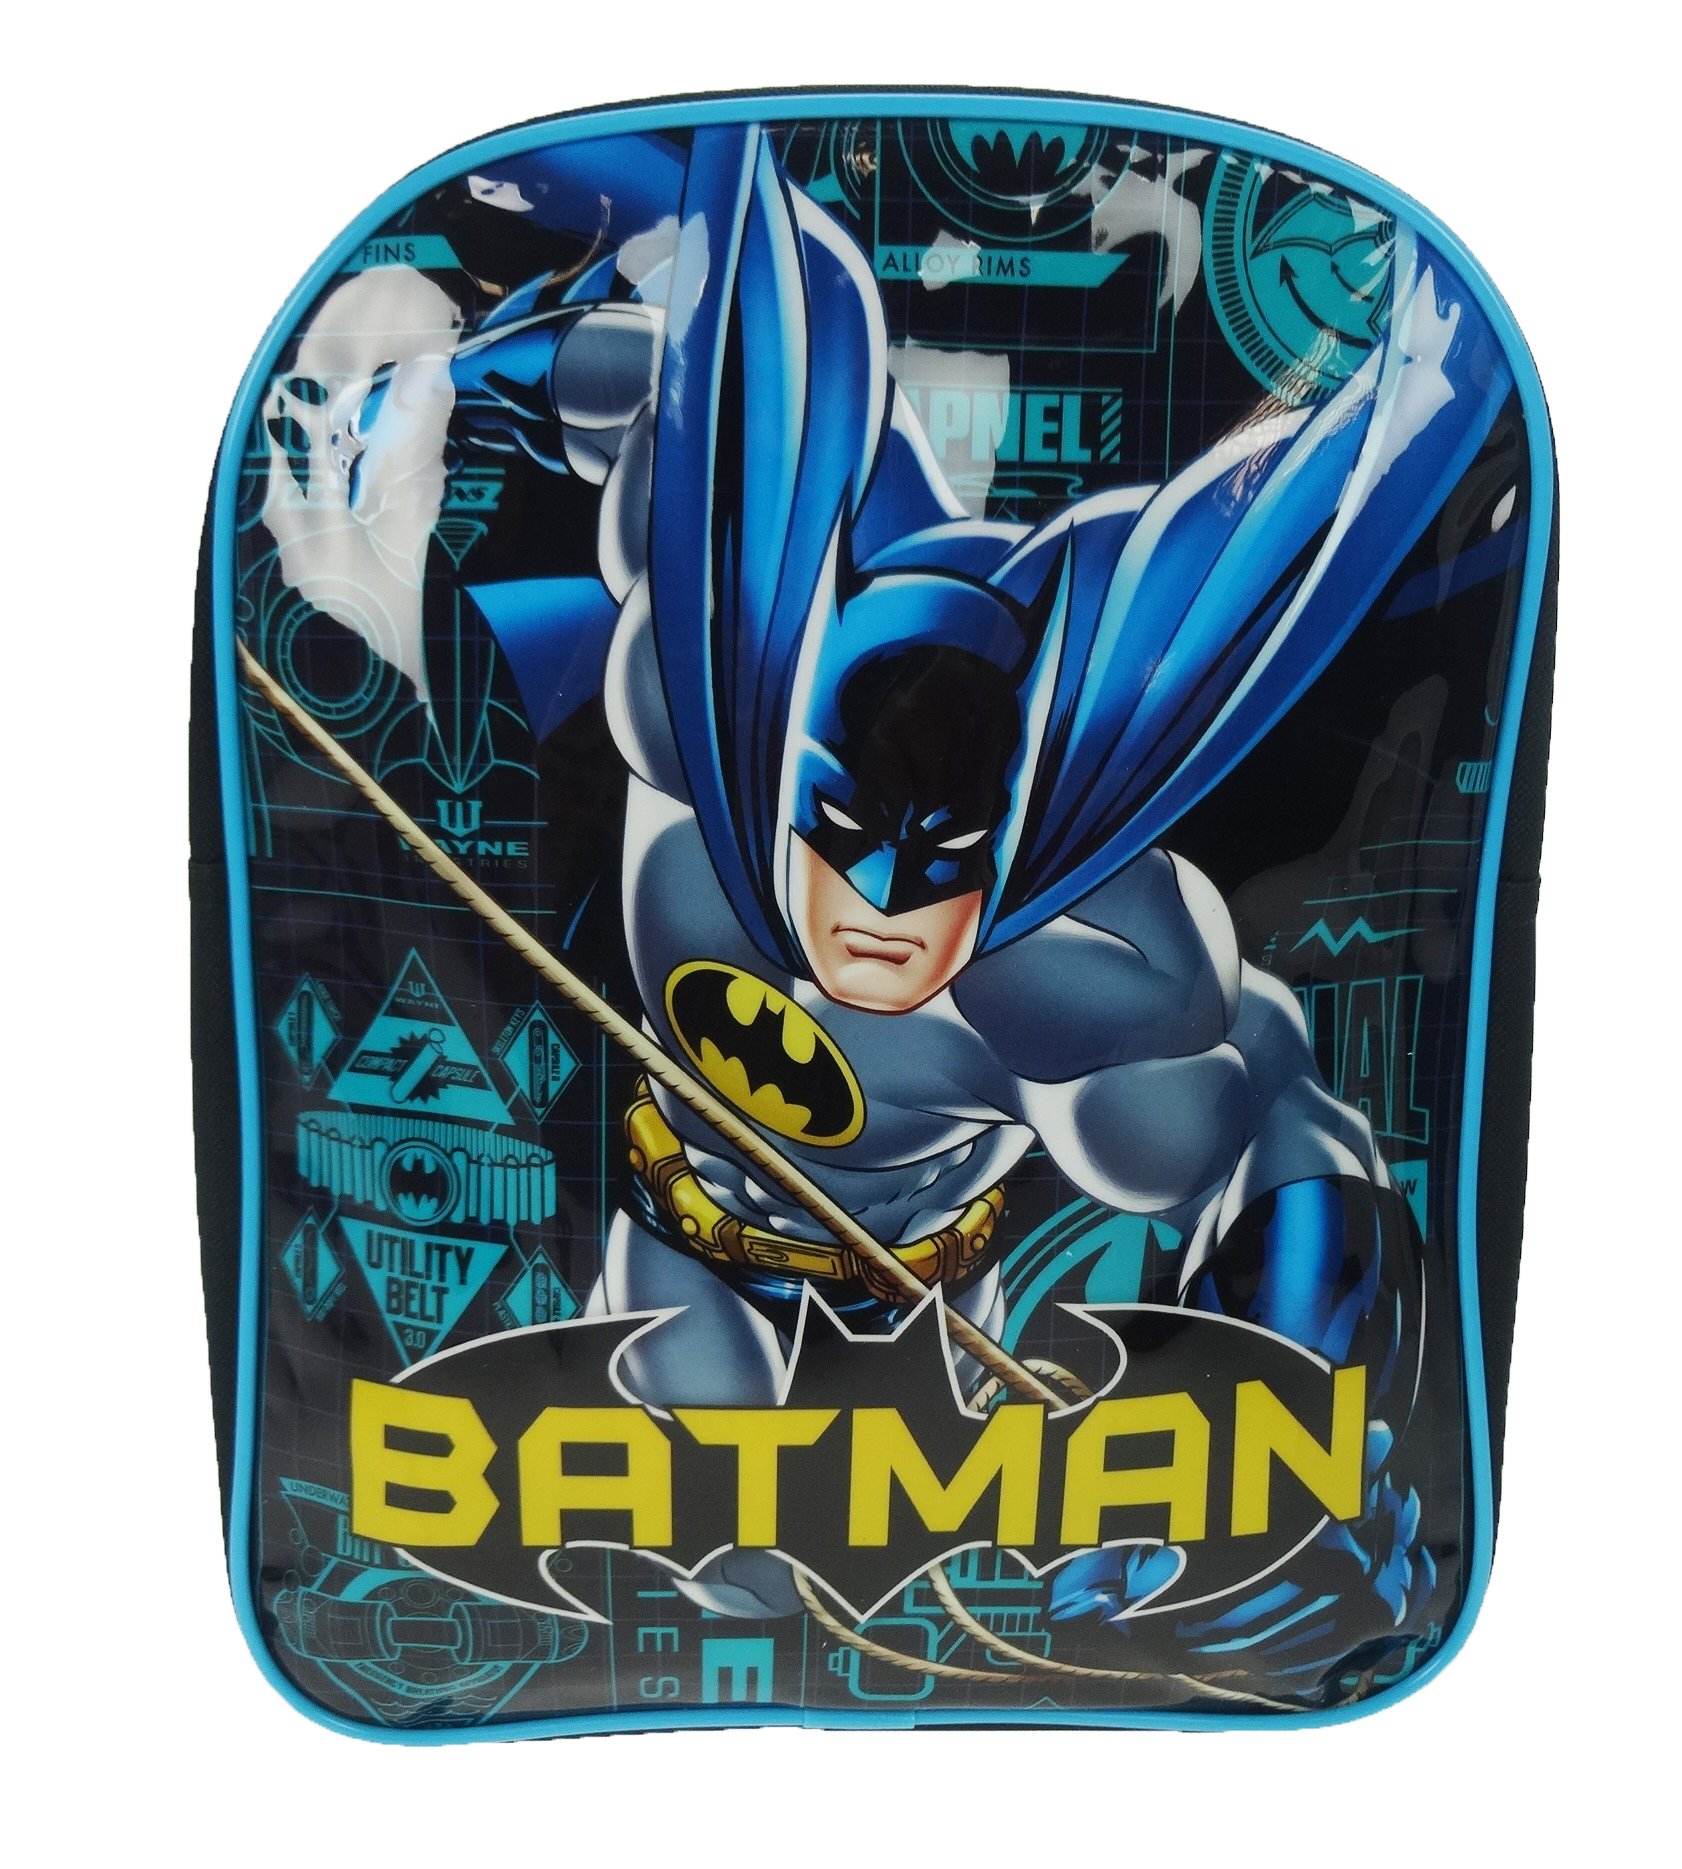 Batman 'Power' Pvc Front School Bag Rucksack Backpack